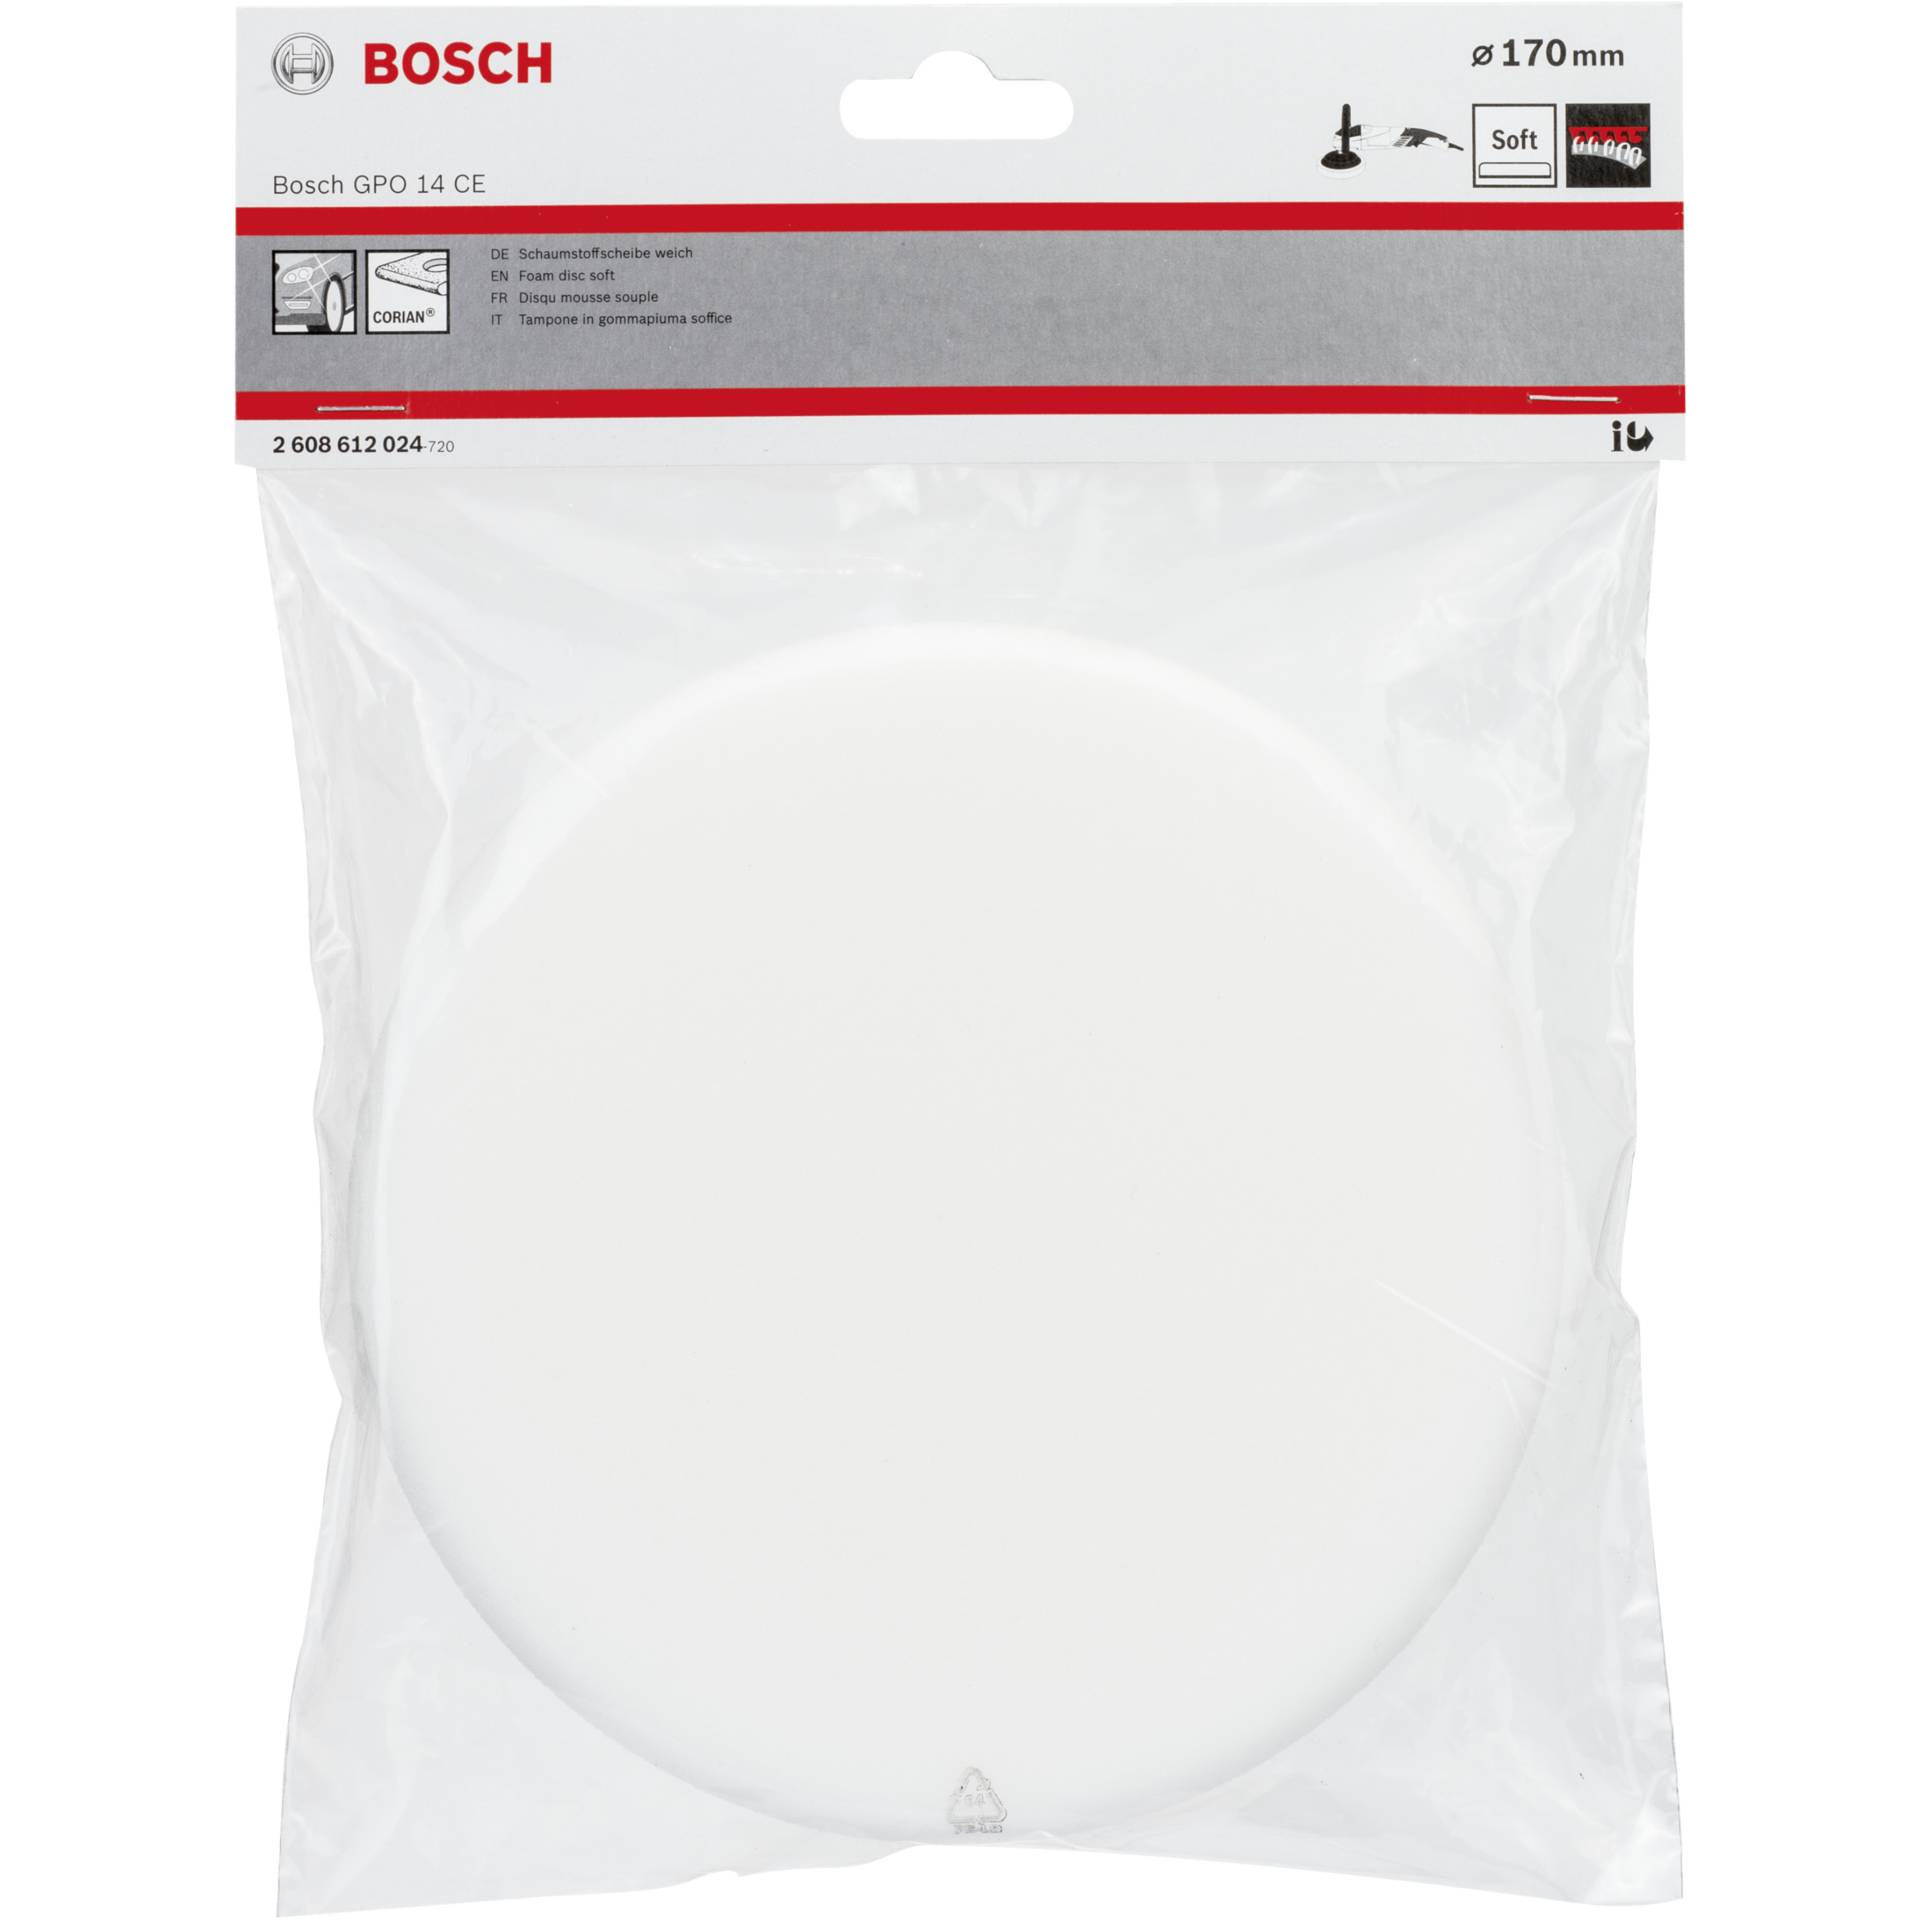 Bosch 1 disco in spugna per lucidatura morbido 170 mm